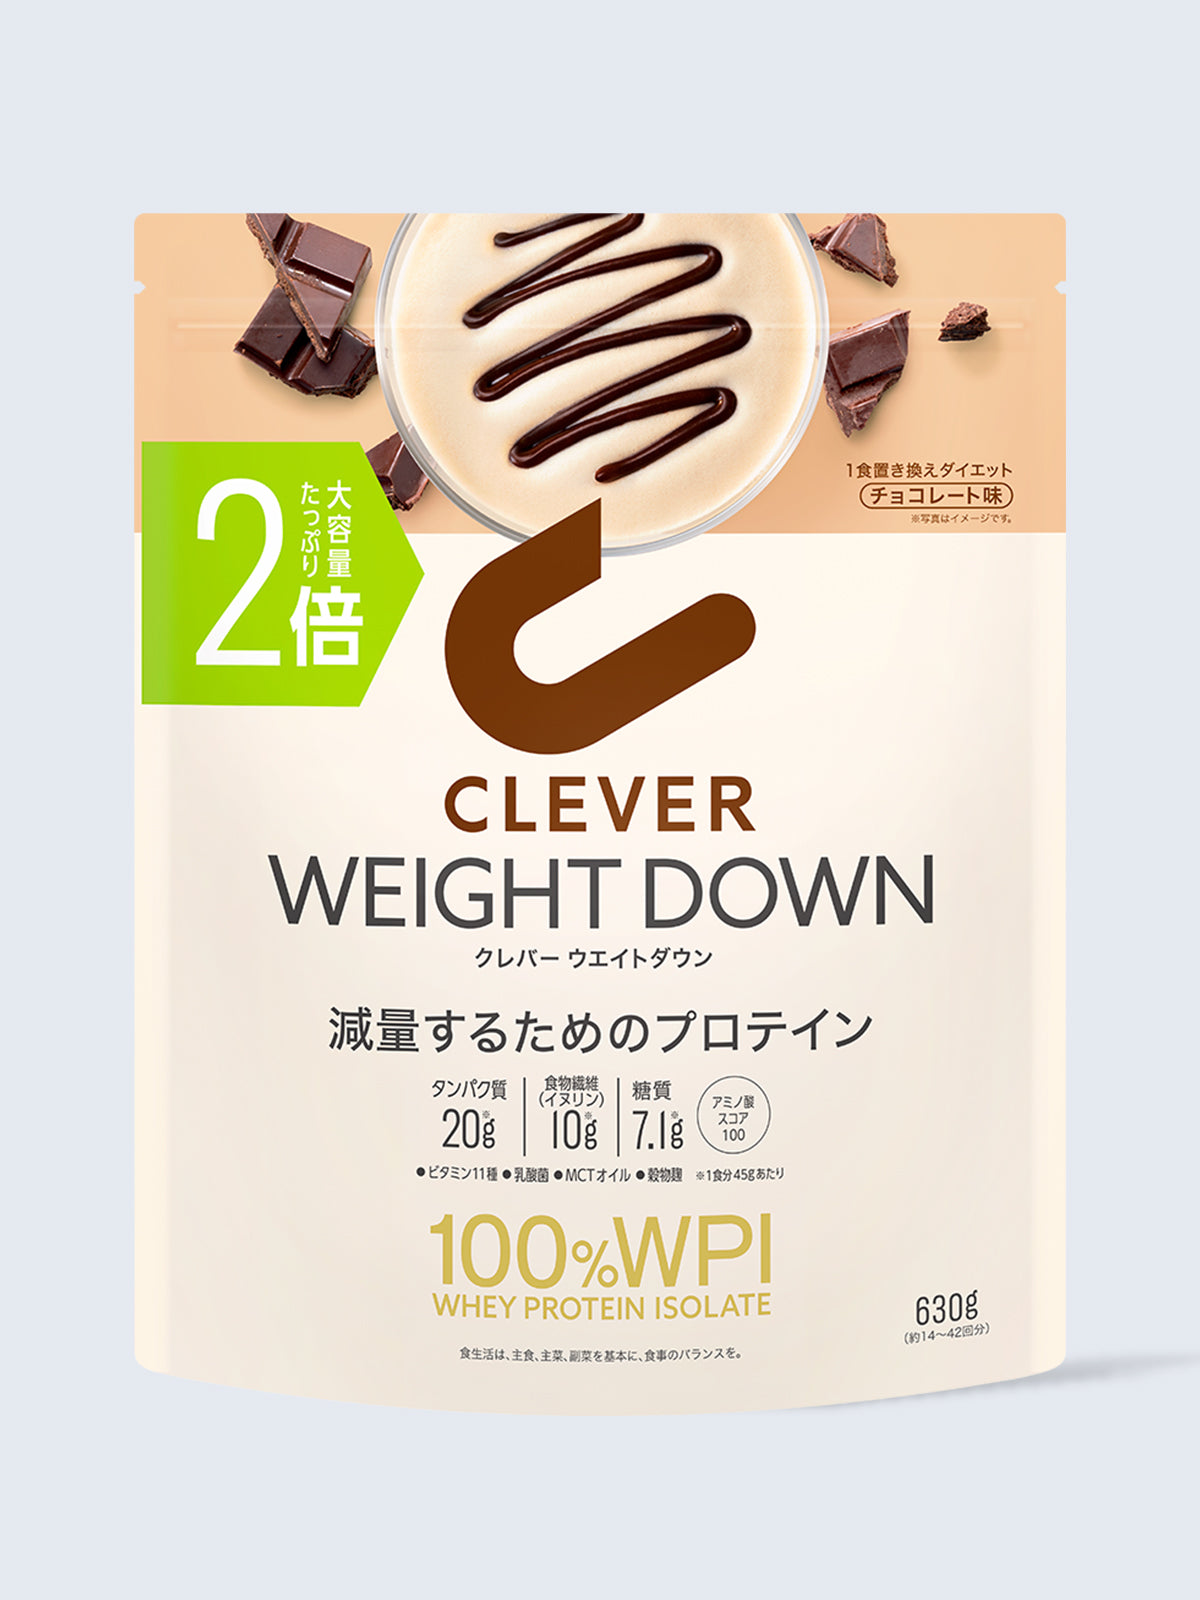 630g プロテイン [1食置き換えダイエット 100%WPI] チョコレート味 クレバー ウエイトダウン 2倍